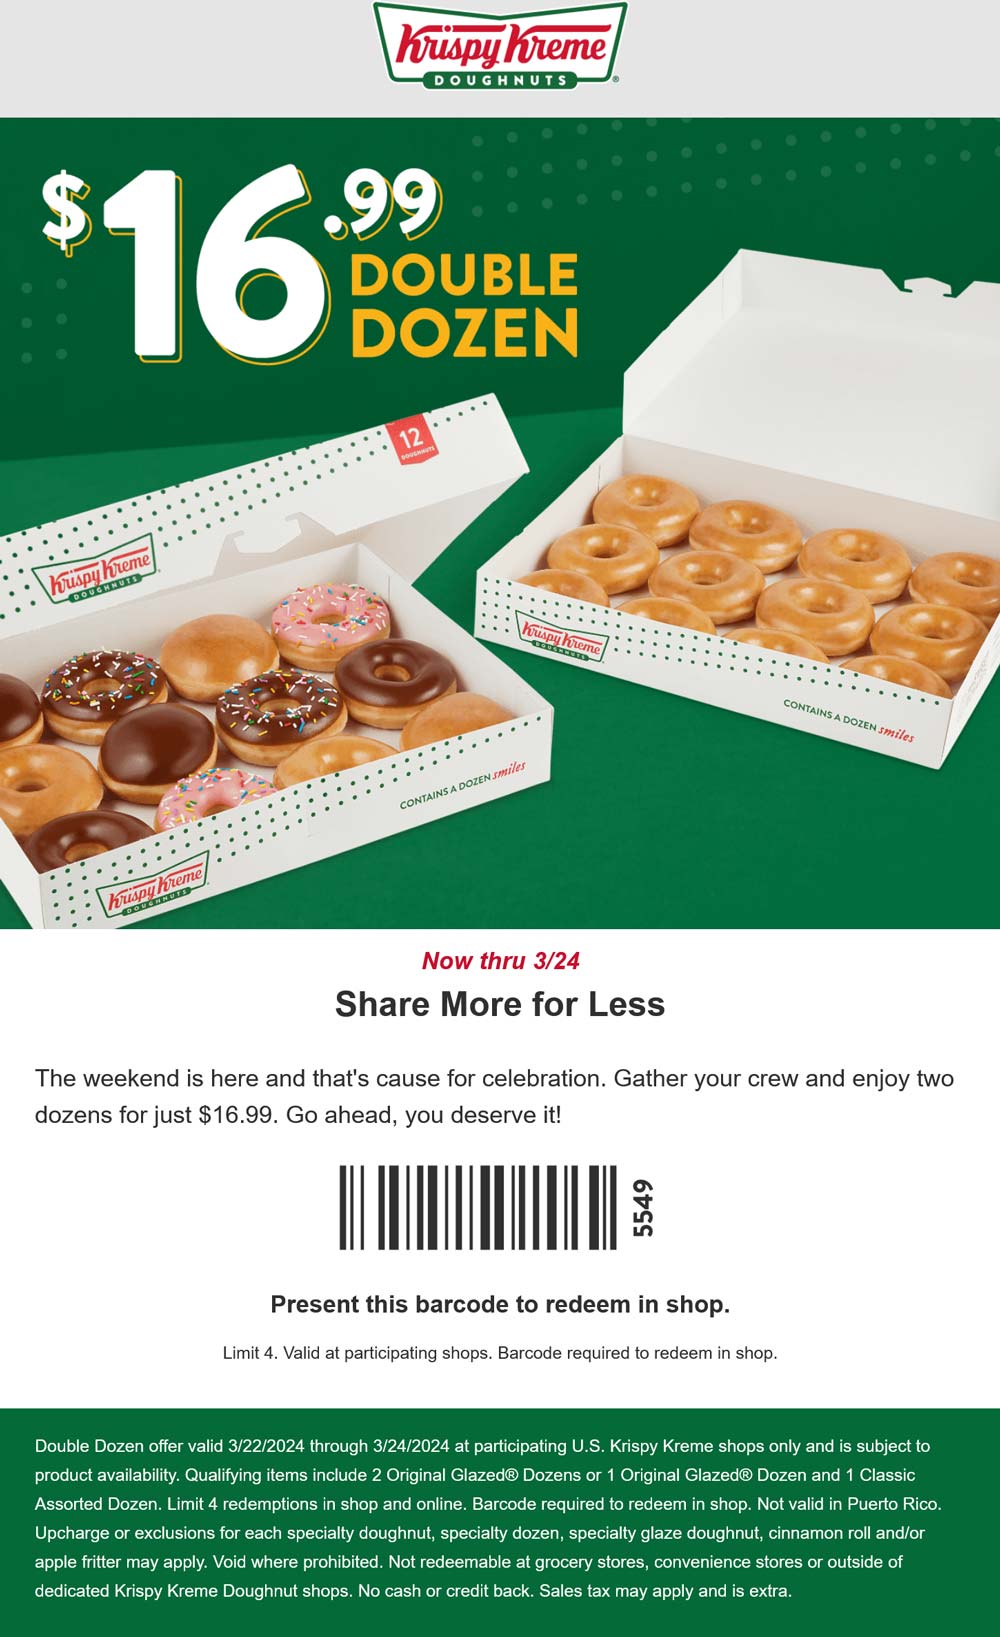 Krispy Kreme restaurants Coupon  $17 double dozen doughnuts at Krispy Kreme #krispykreme 